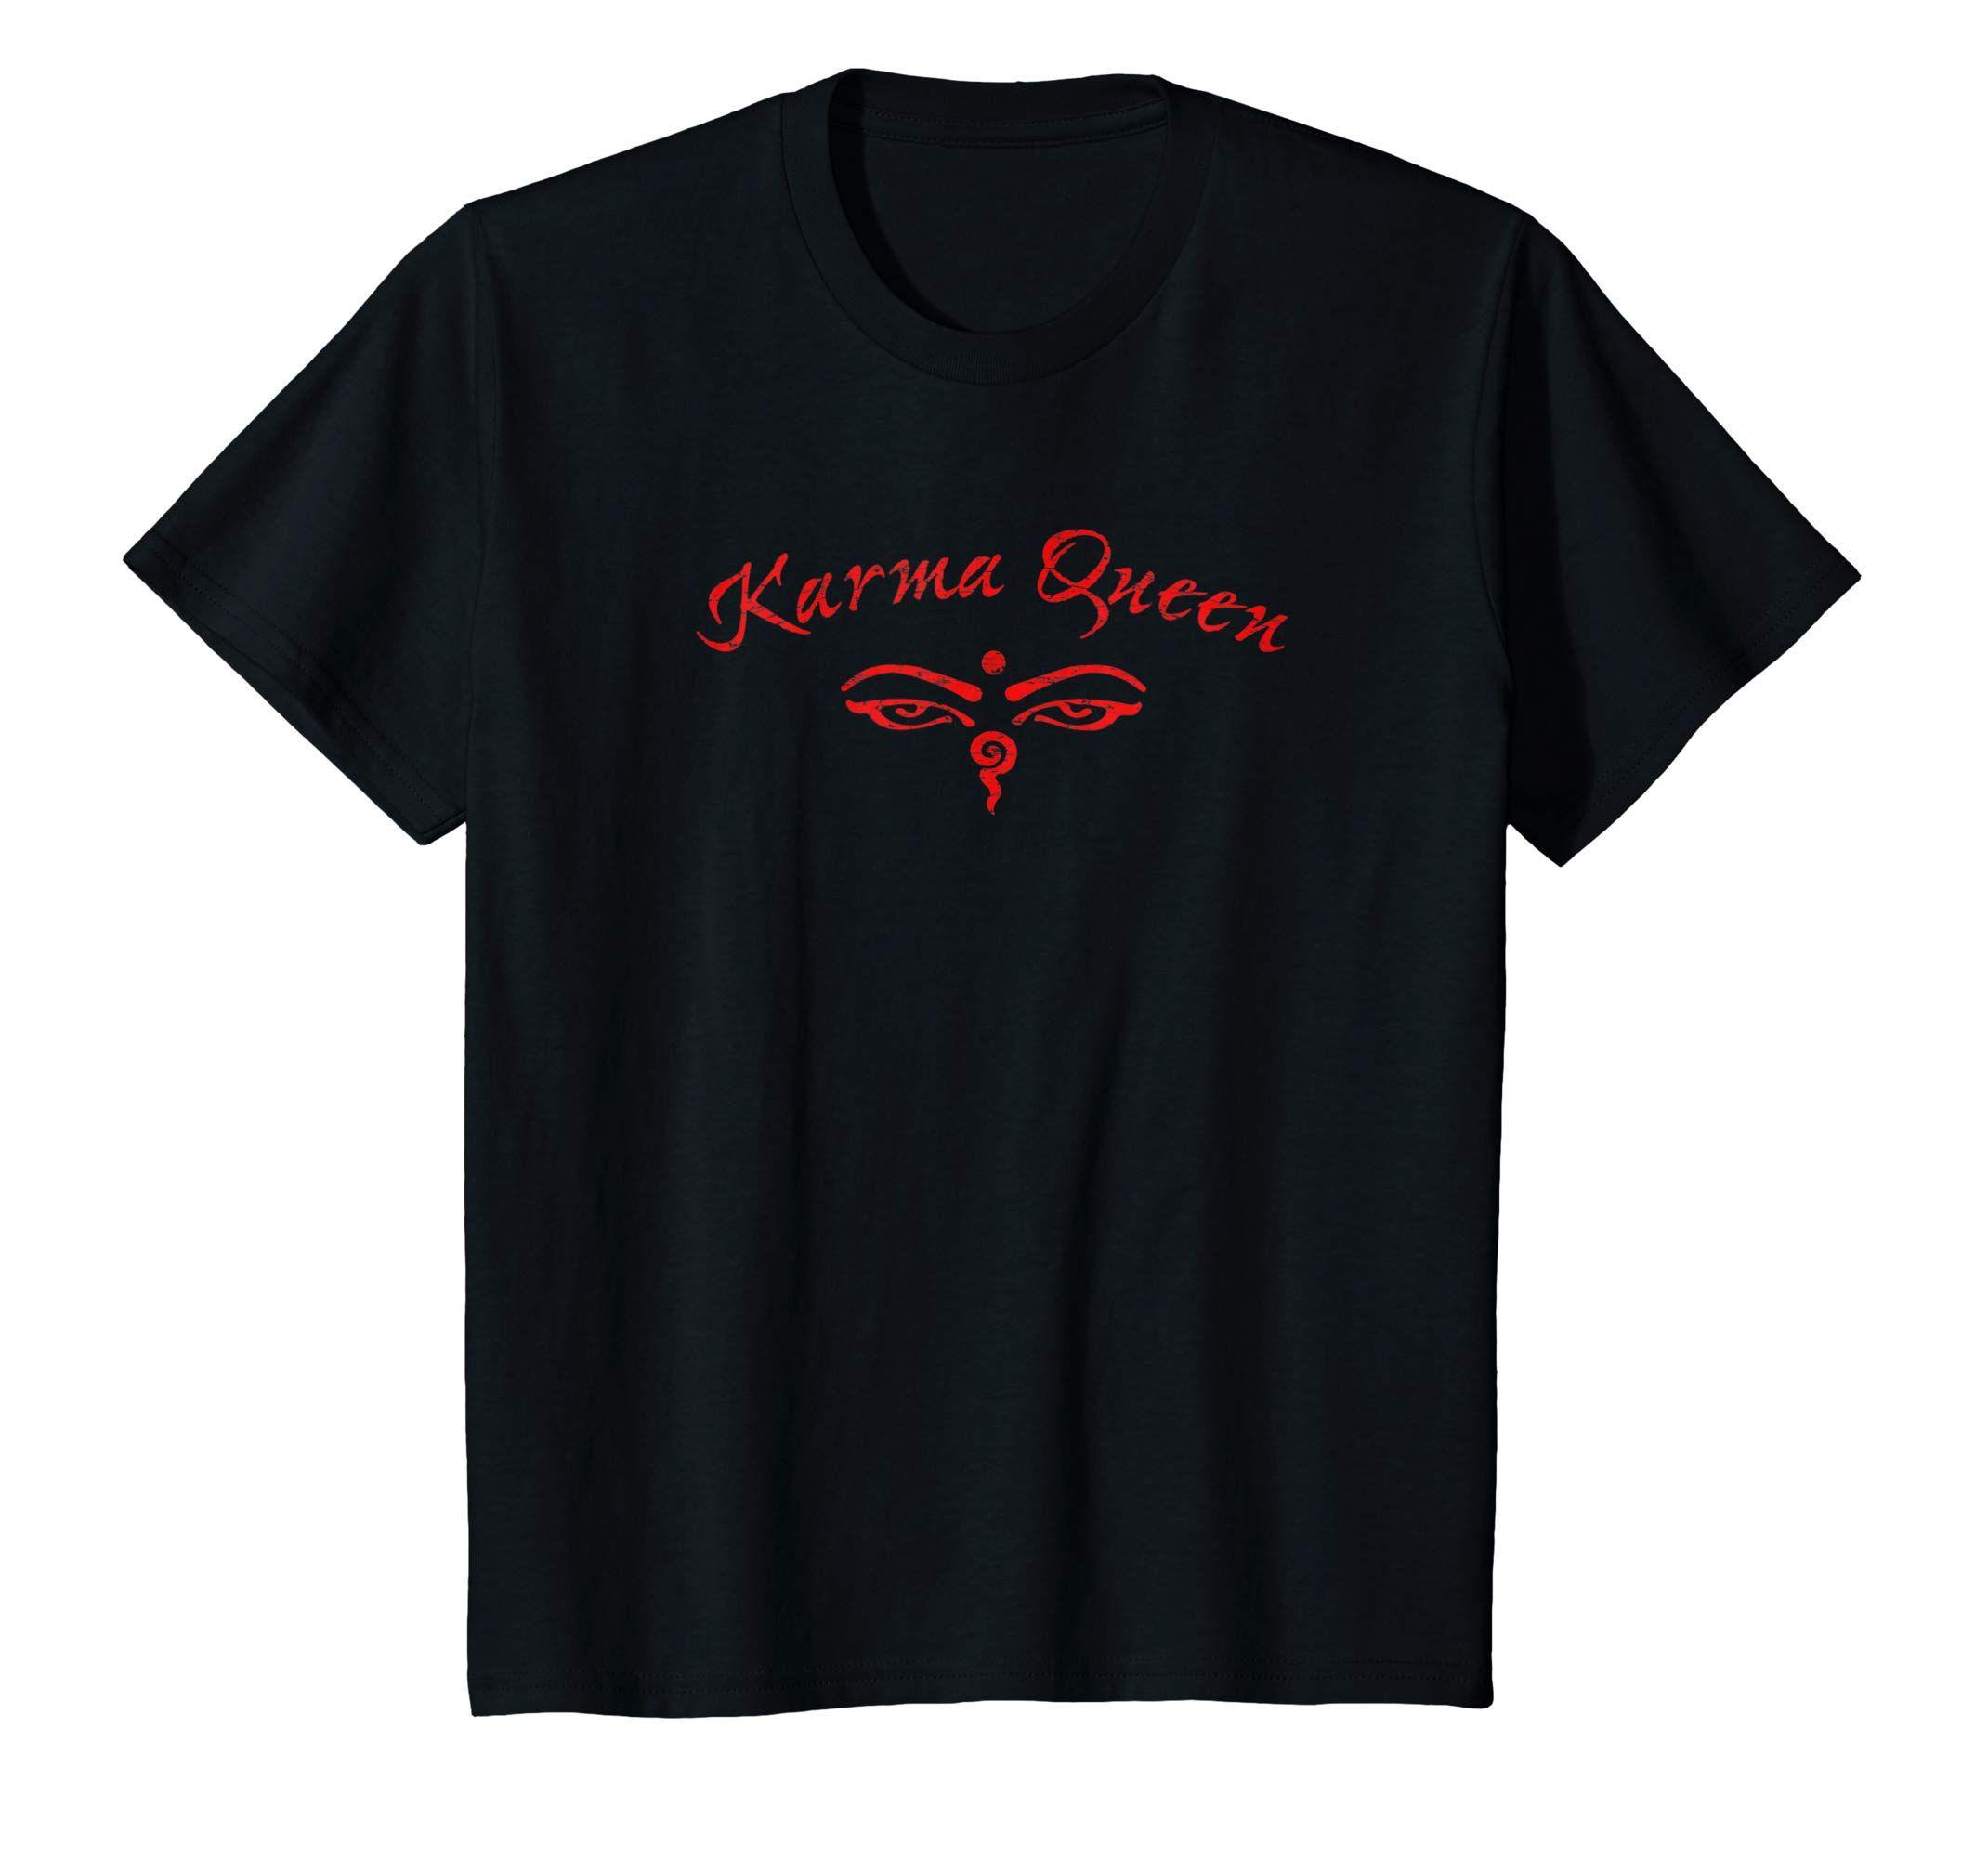 Queen Karma Logo - Amazon.com: Karma Queen Eyes of Wisdom T-shirt: Clothing